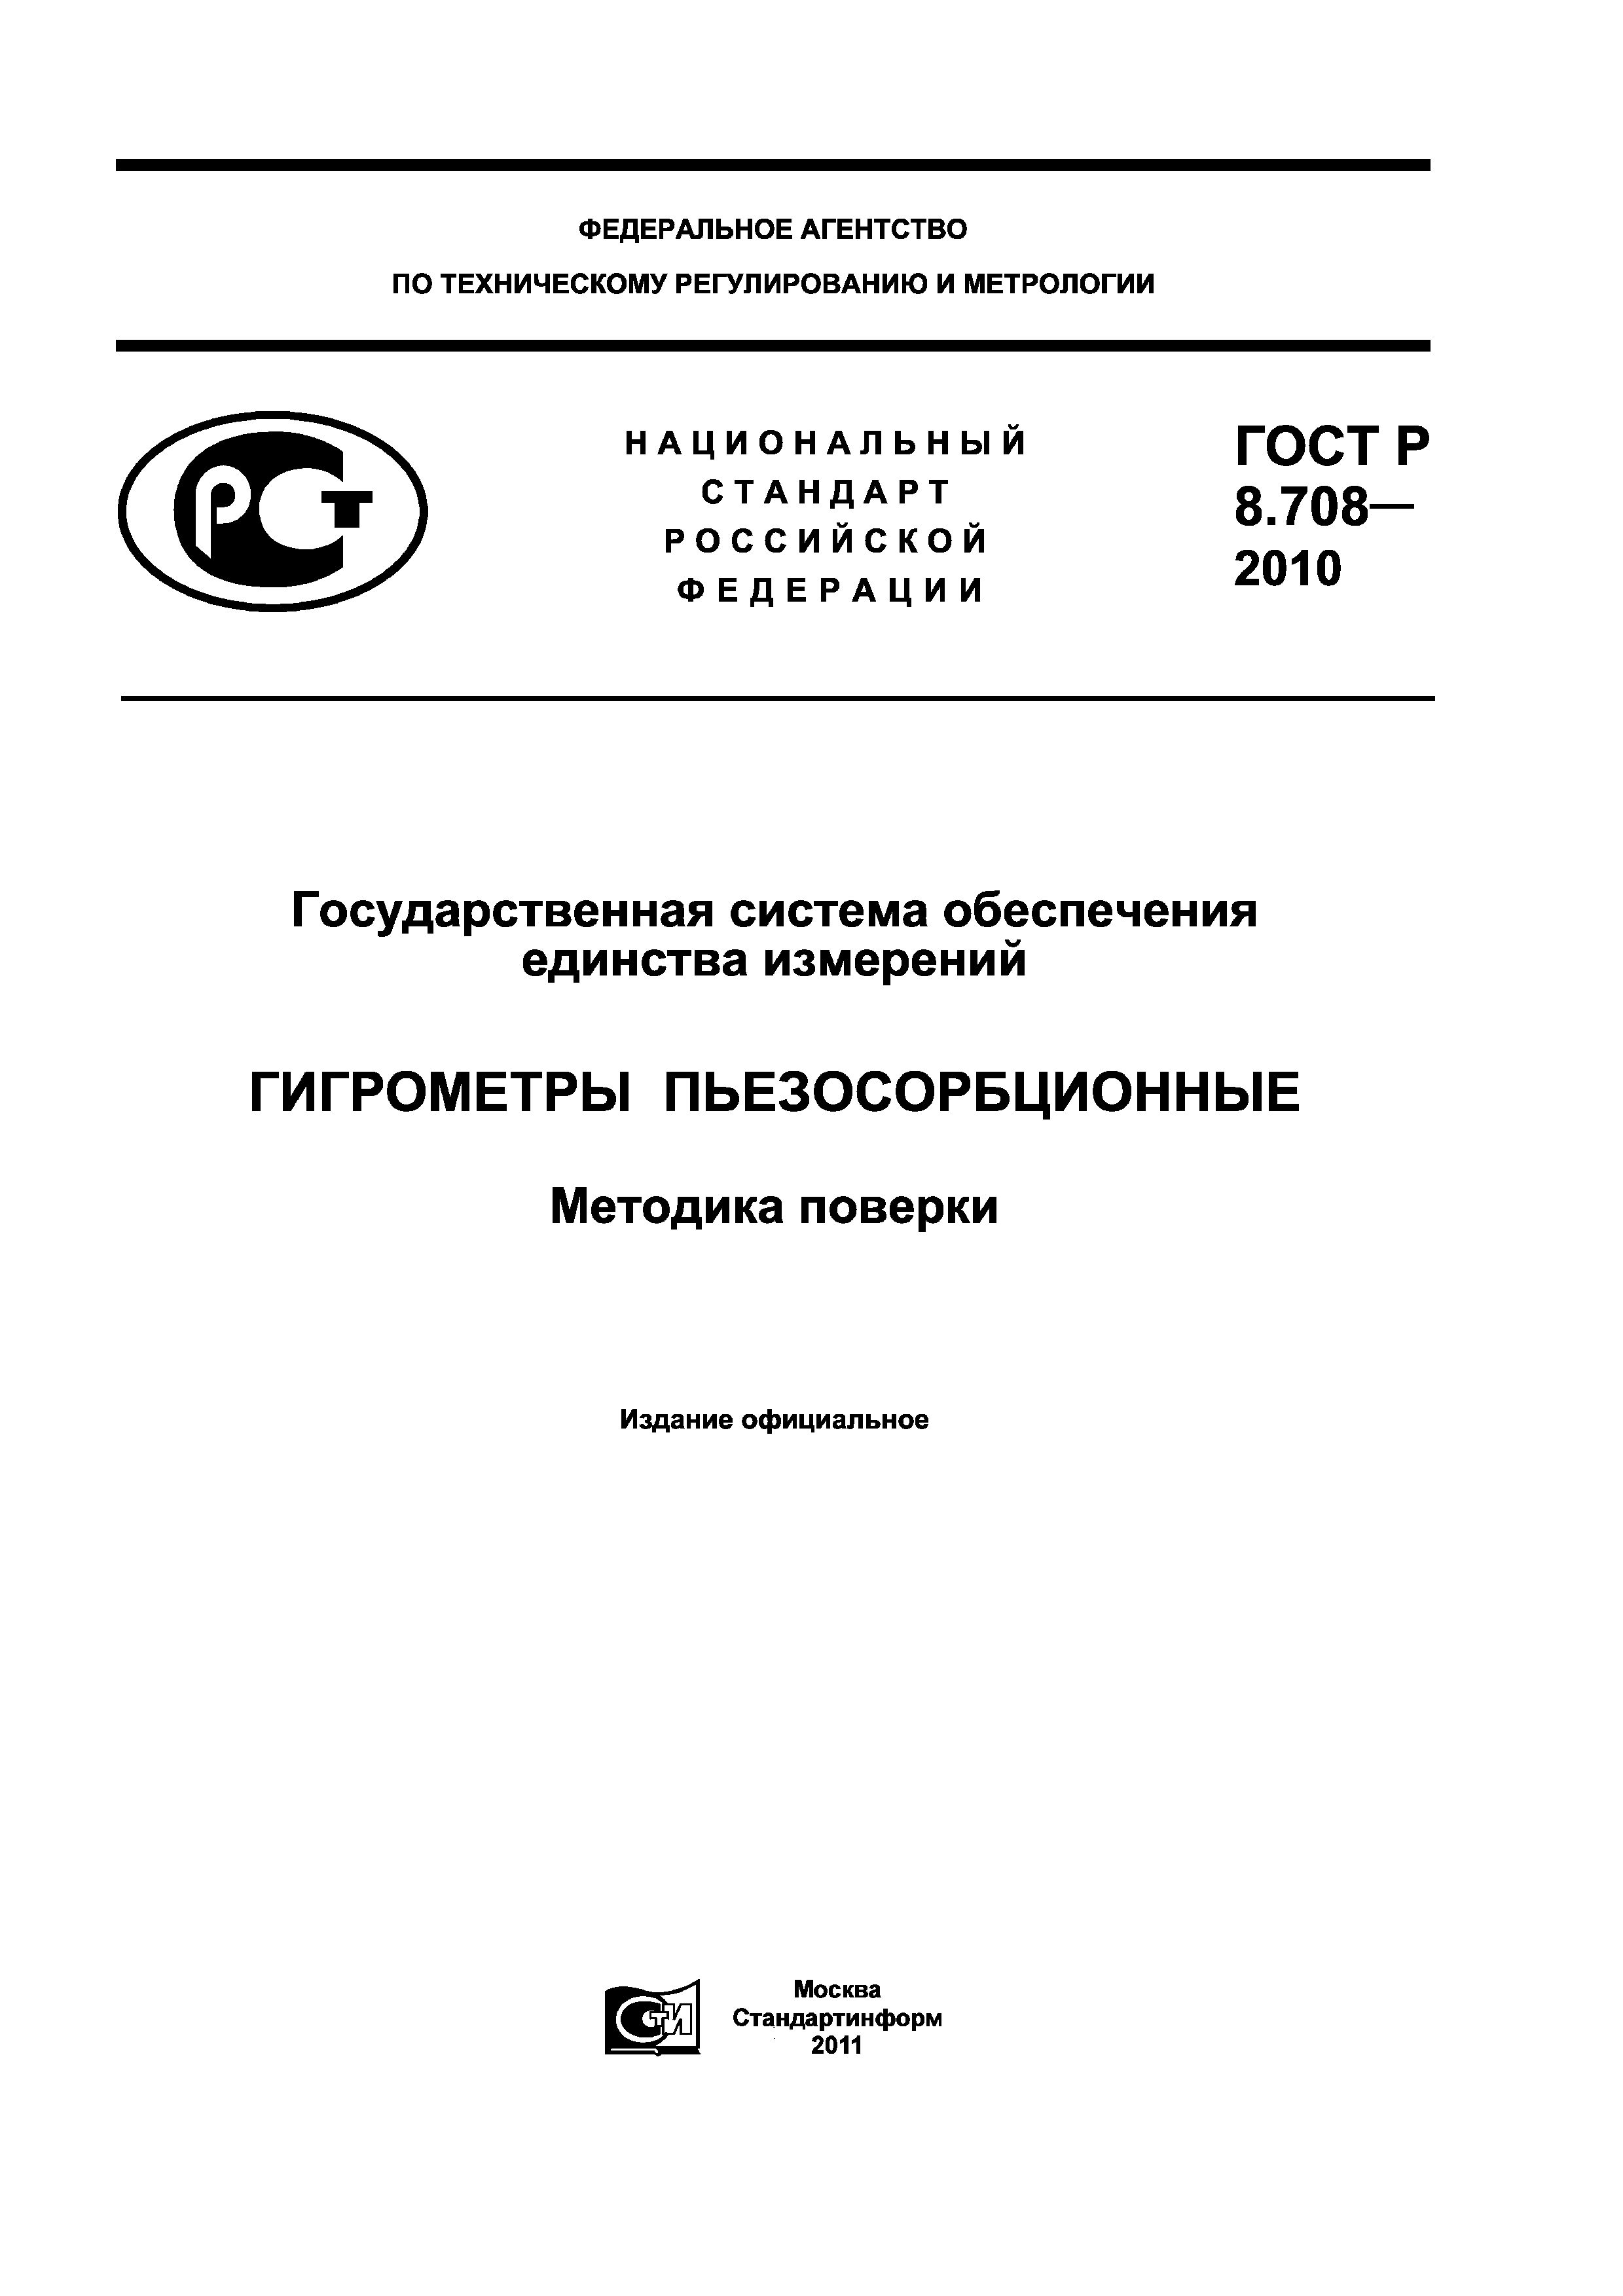 ГОСТ Р 8.708-2010